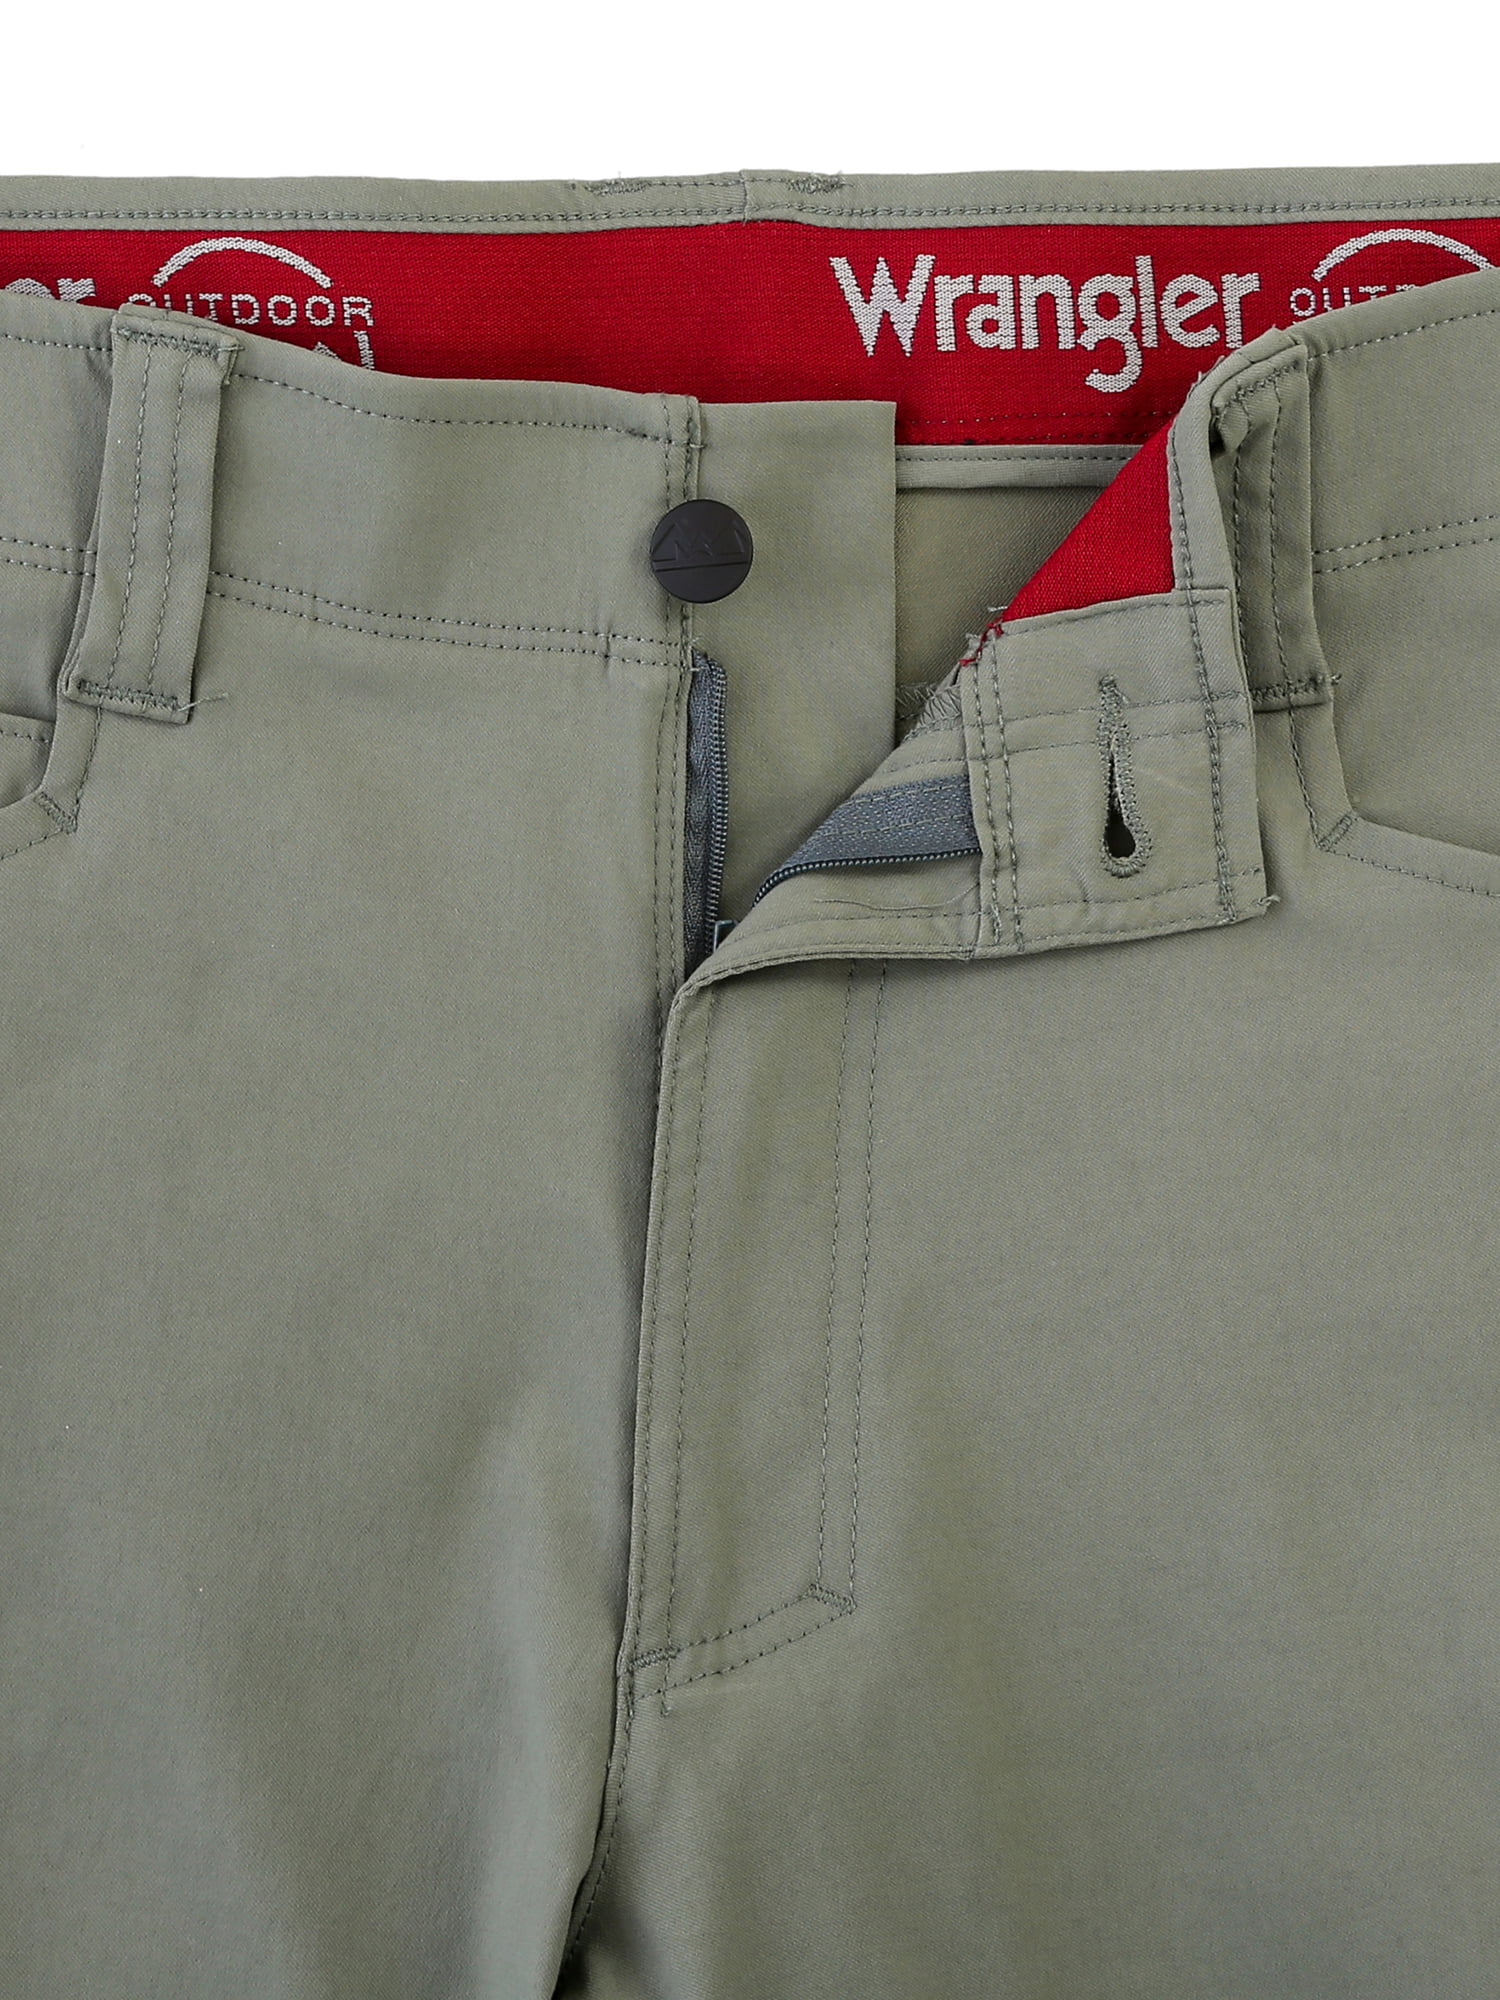 wrangler stretch work pants